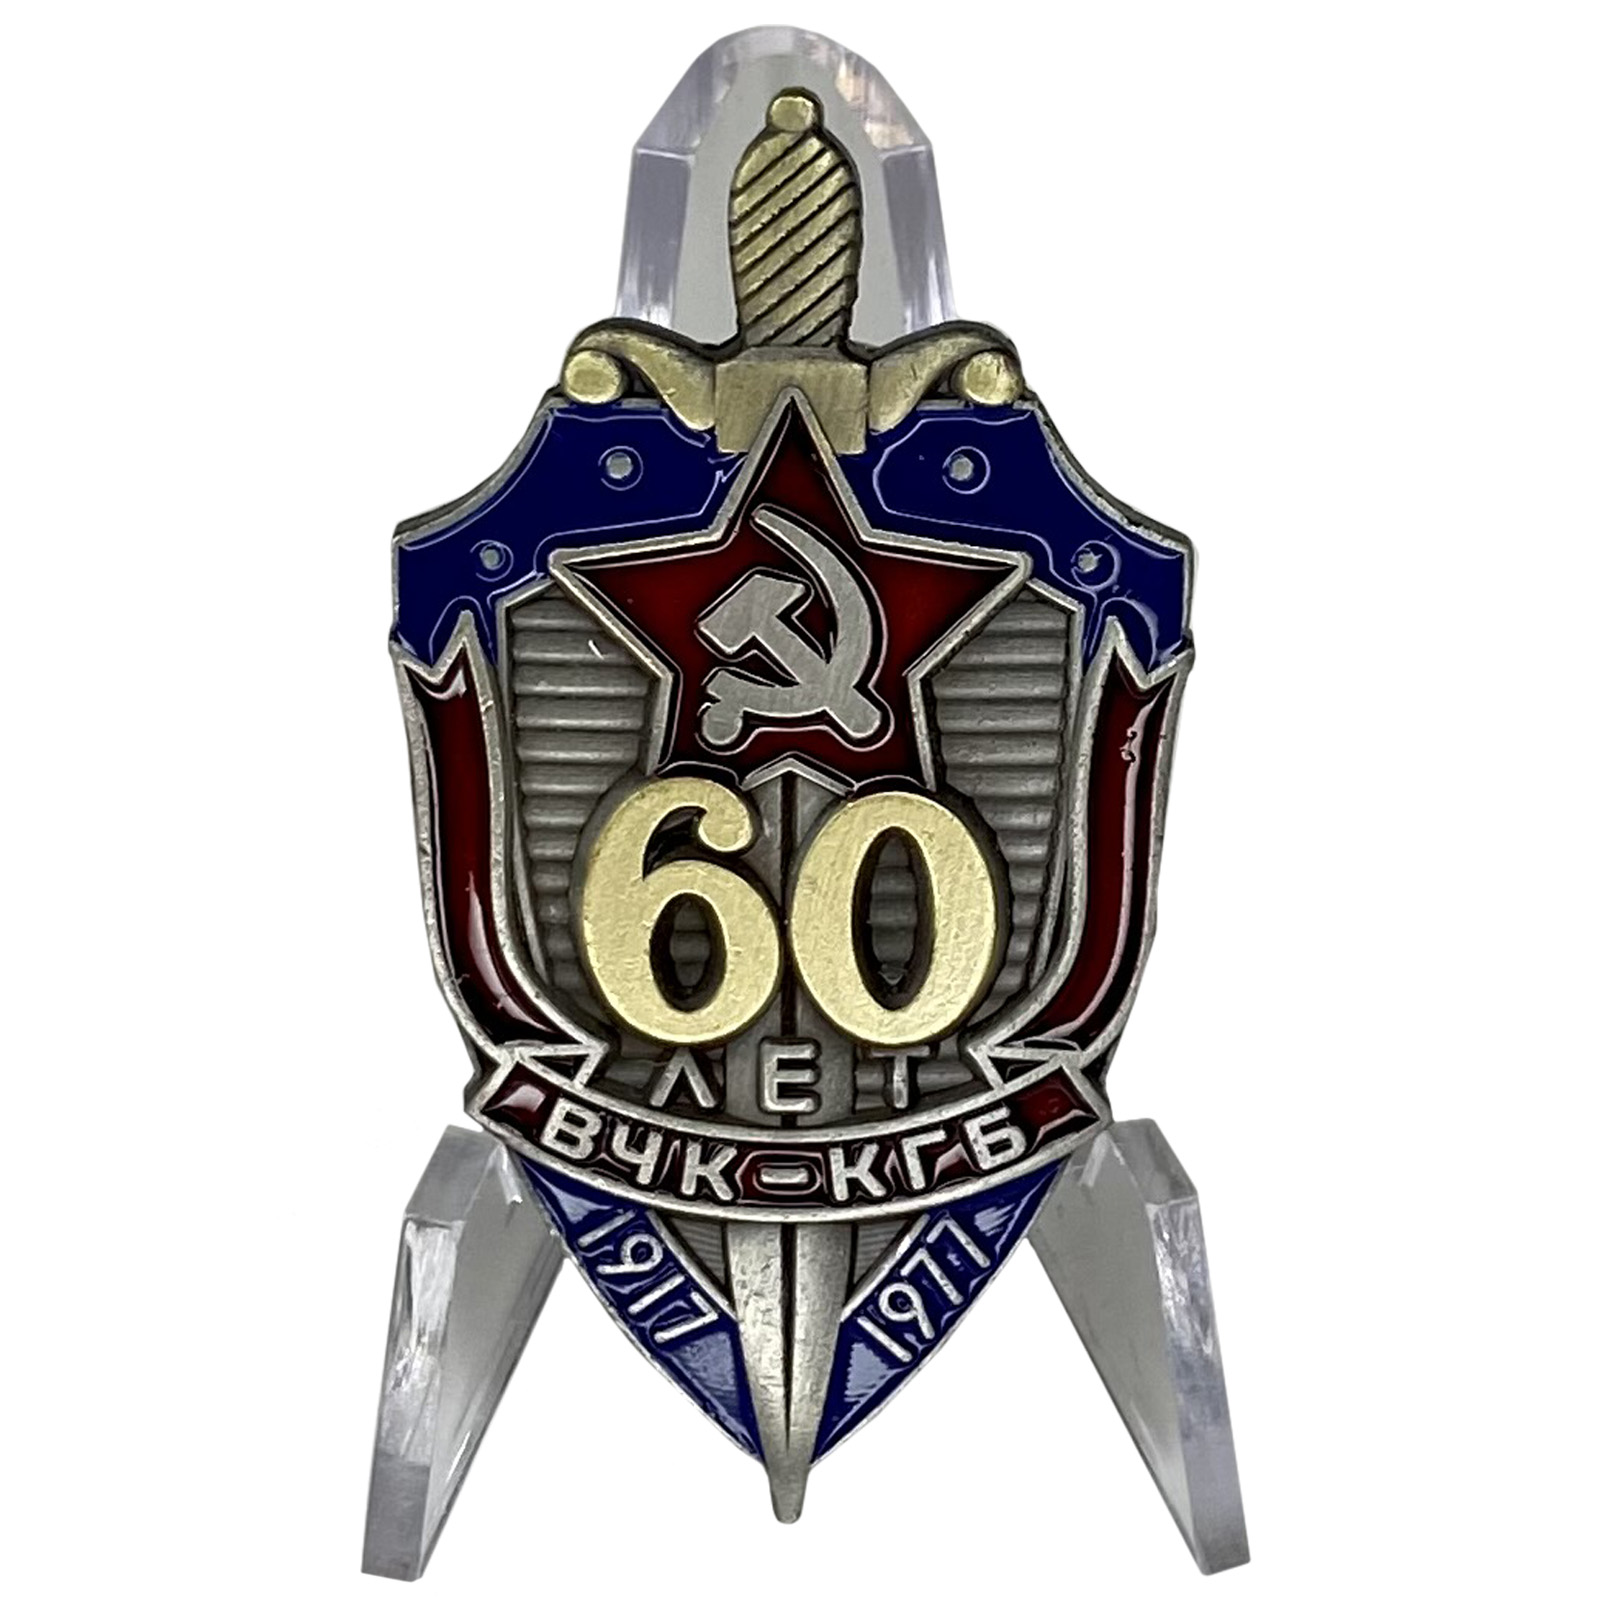 Знак "60 лет ВЧК-КГБ" на подставке